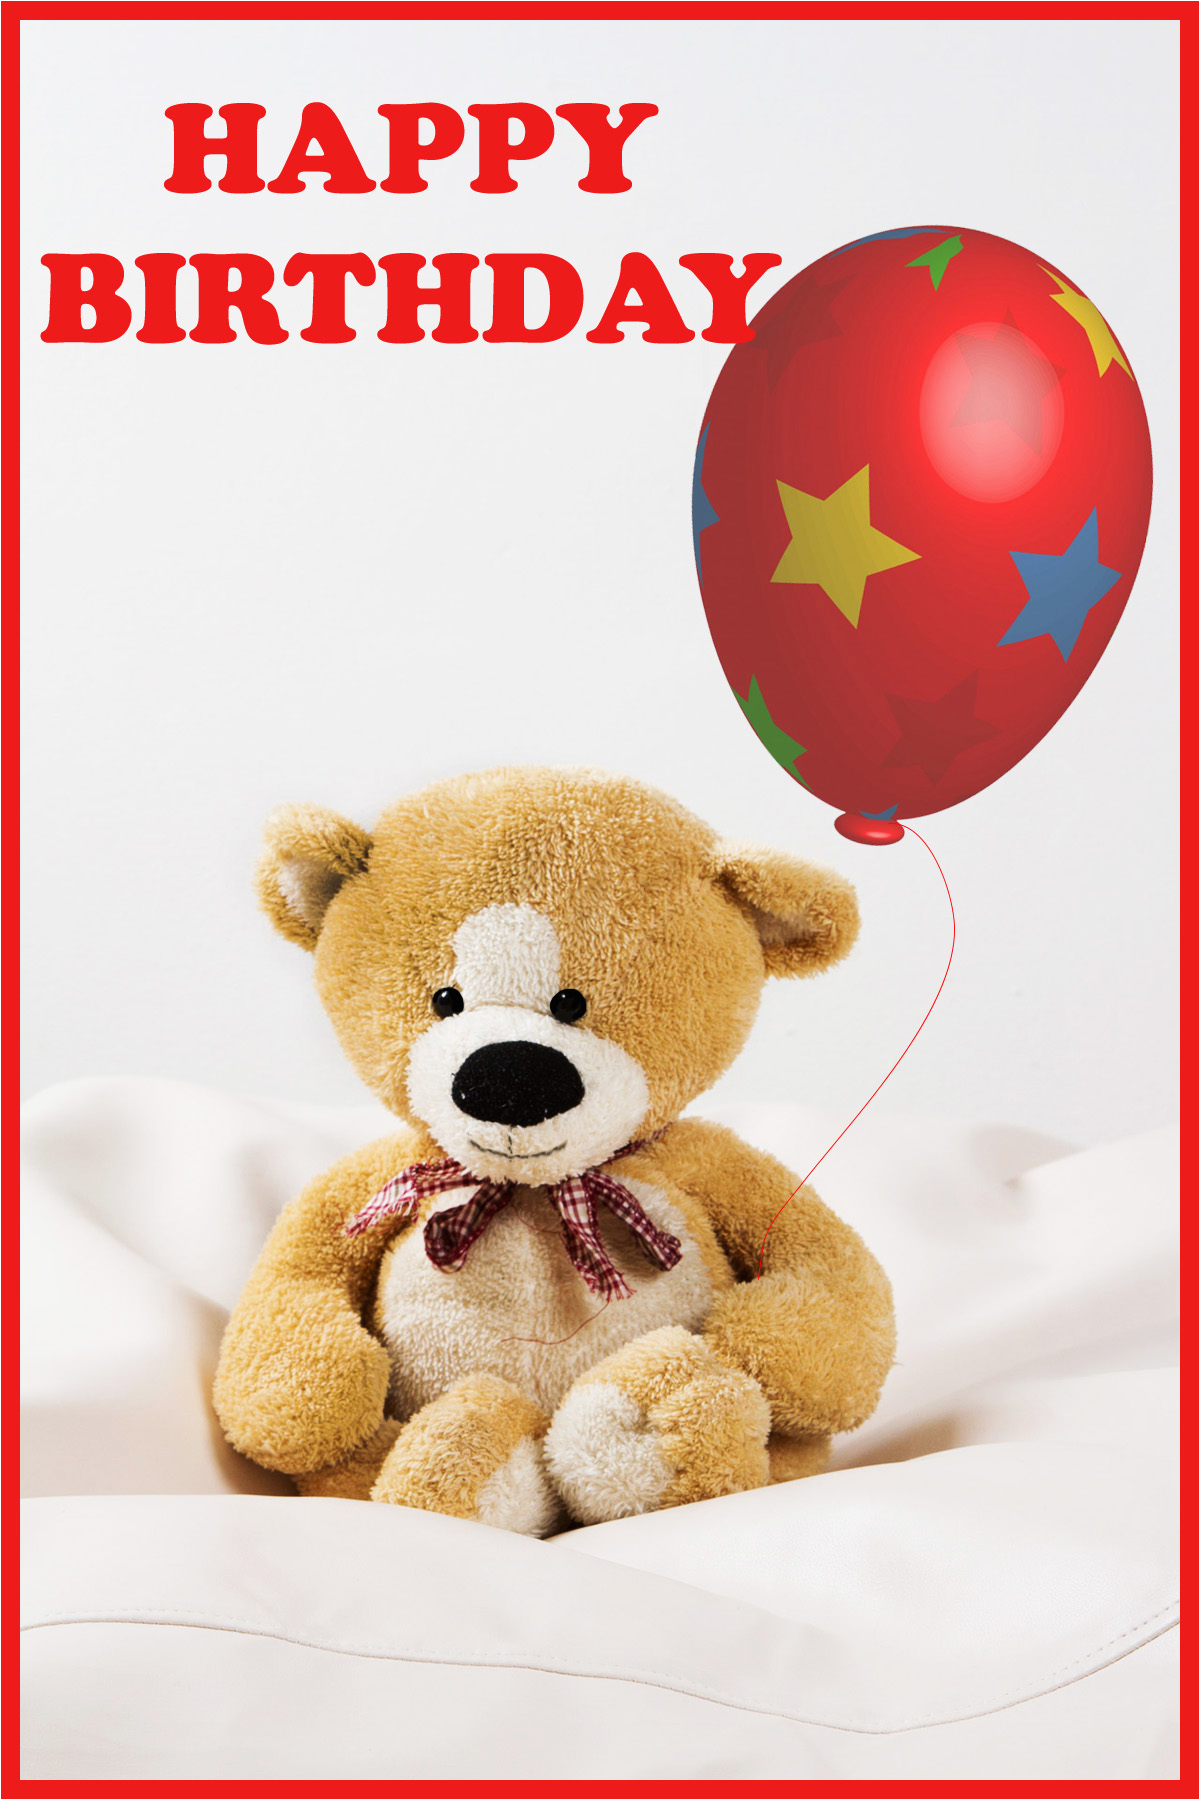 free birthday cards with teddy bears